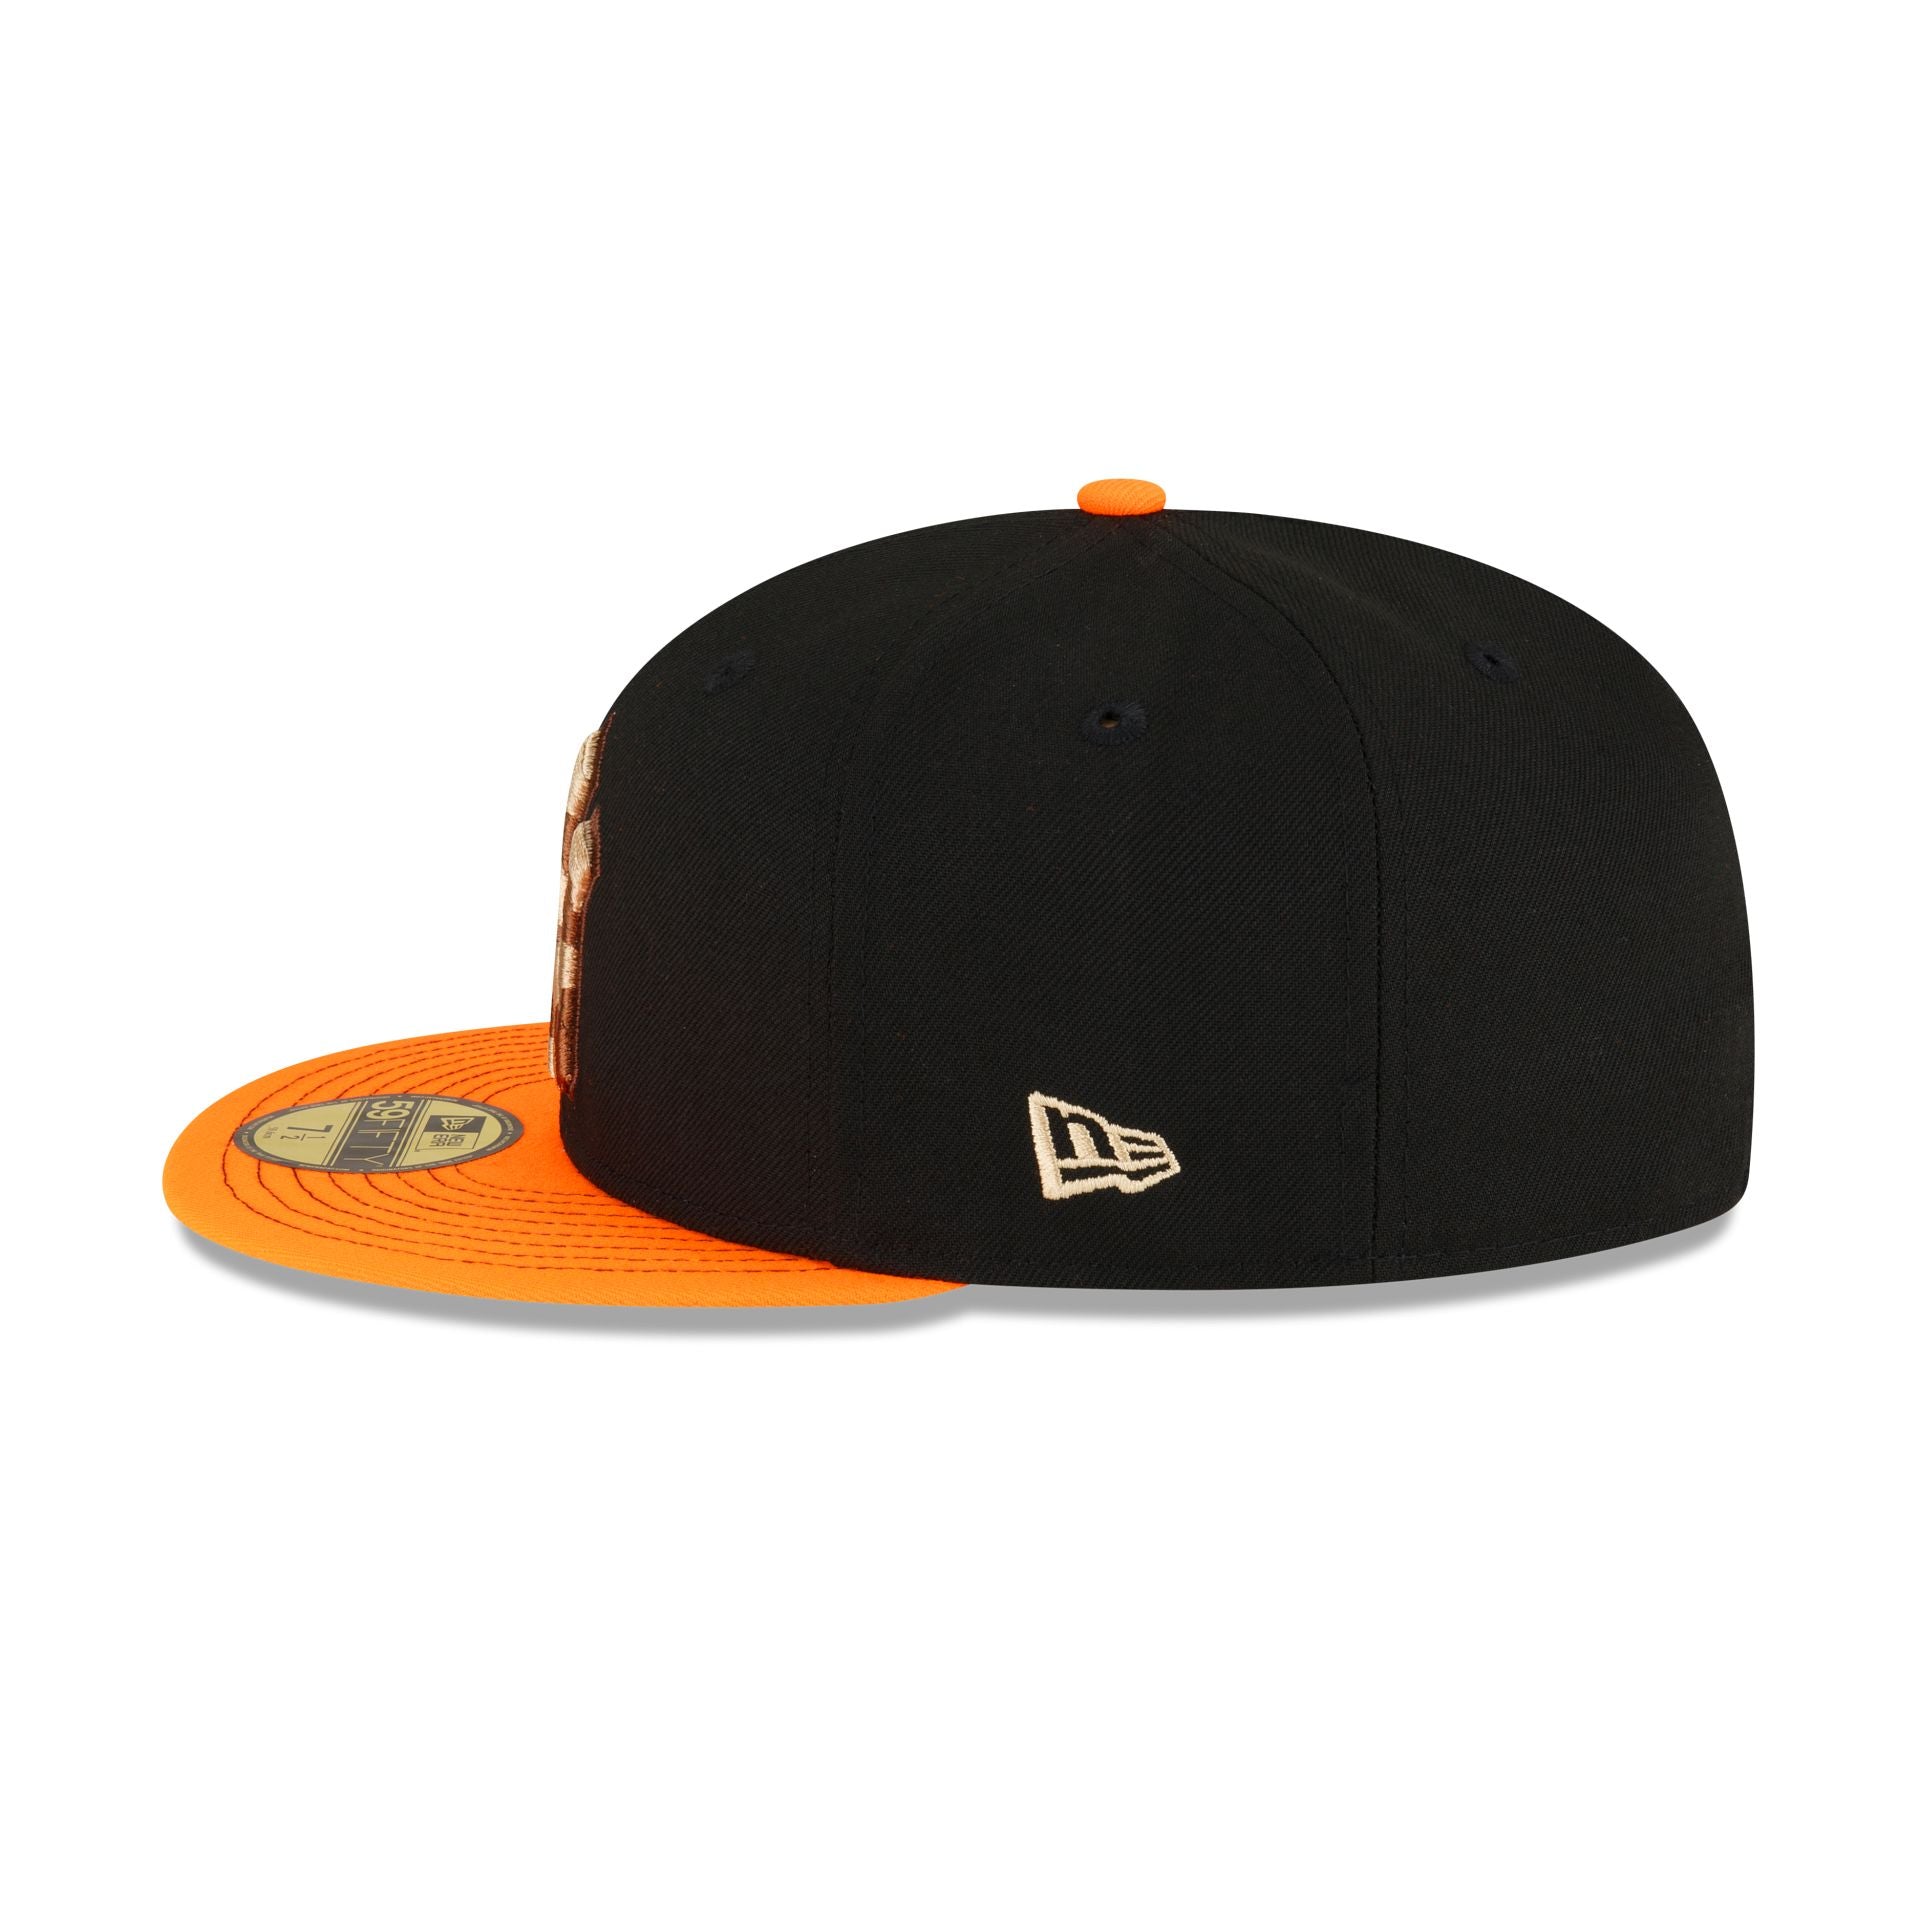 59FIFTY Visor Caps Orange Fitted Hat – Cap Just Era York Yankees New New